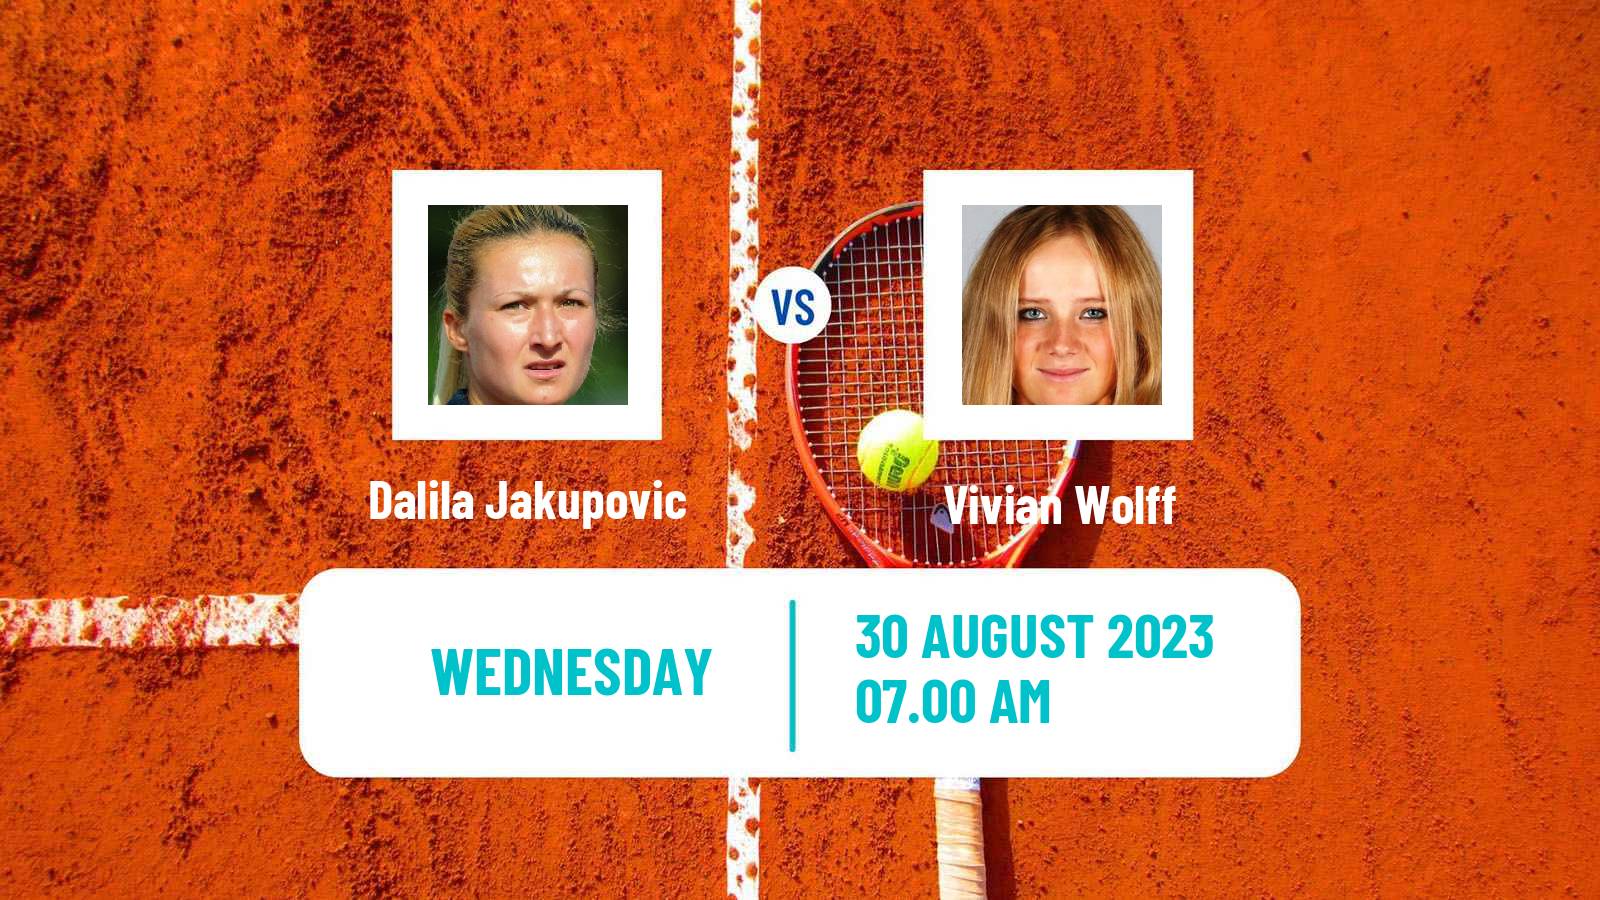 Tennis ITF W40 Oldenzaal Women Dalila Jakupovic - Vivian Wolff